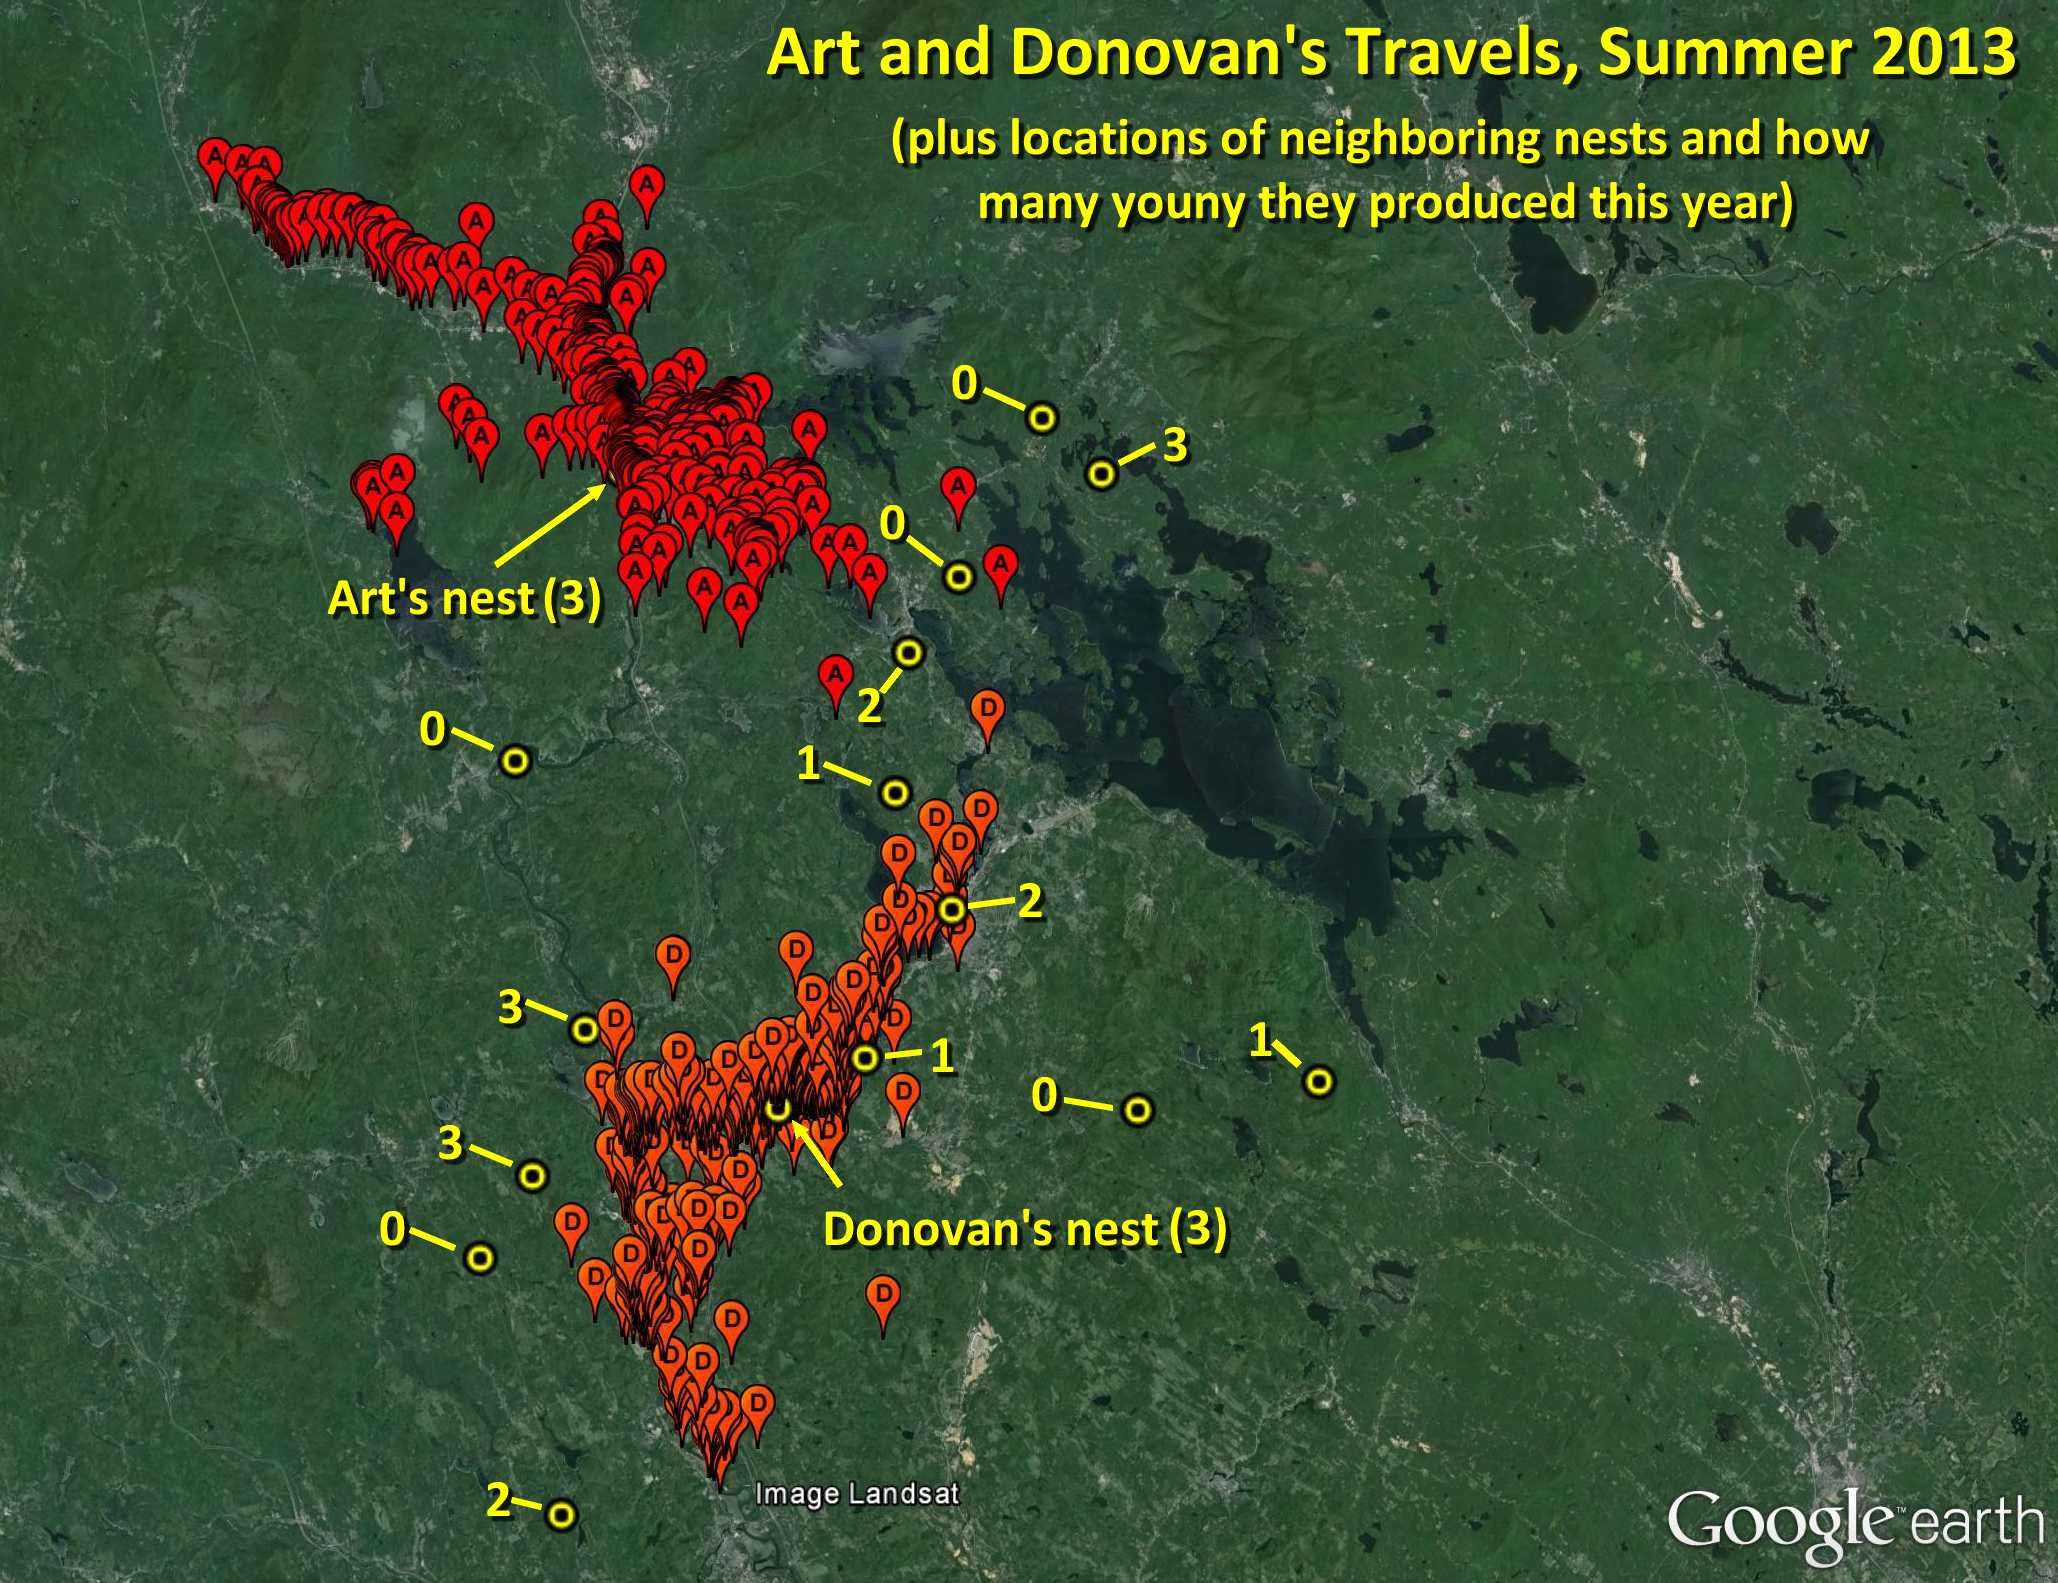 Art and Donovan's territories summer 2013